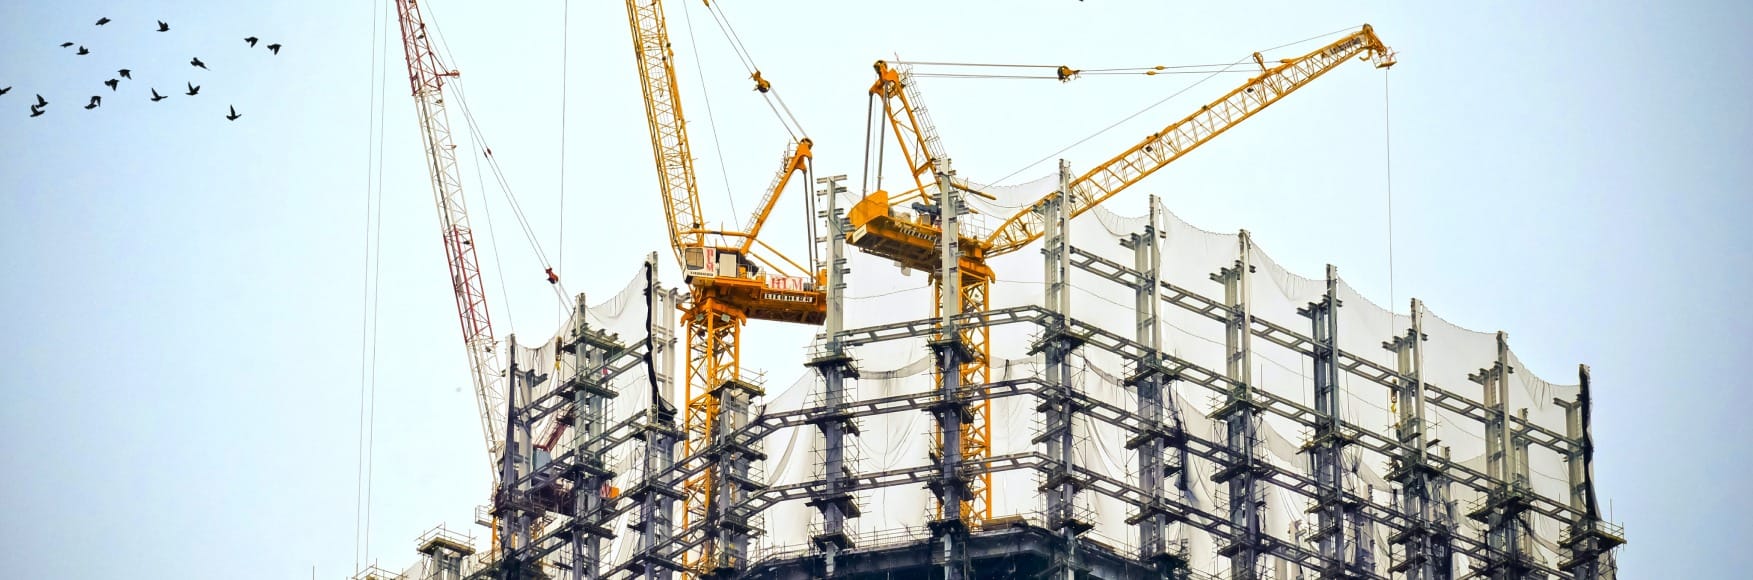 crane_construction_building.jpg